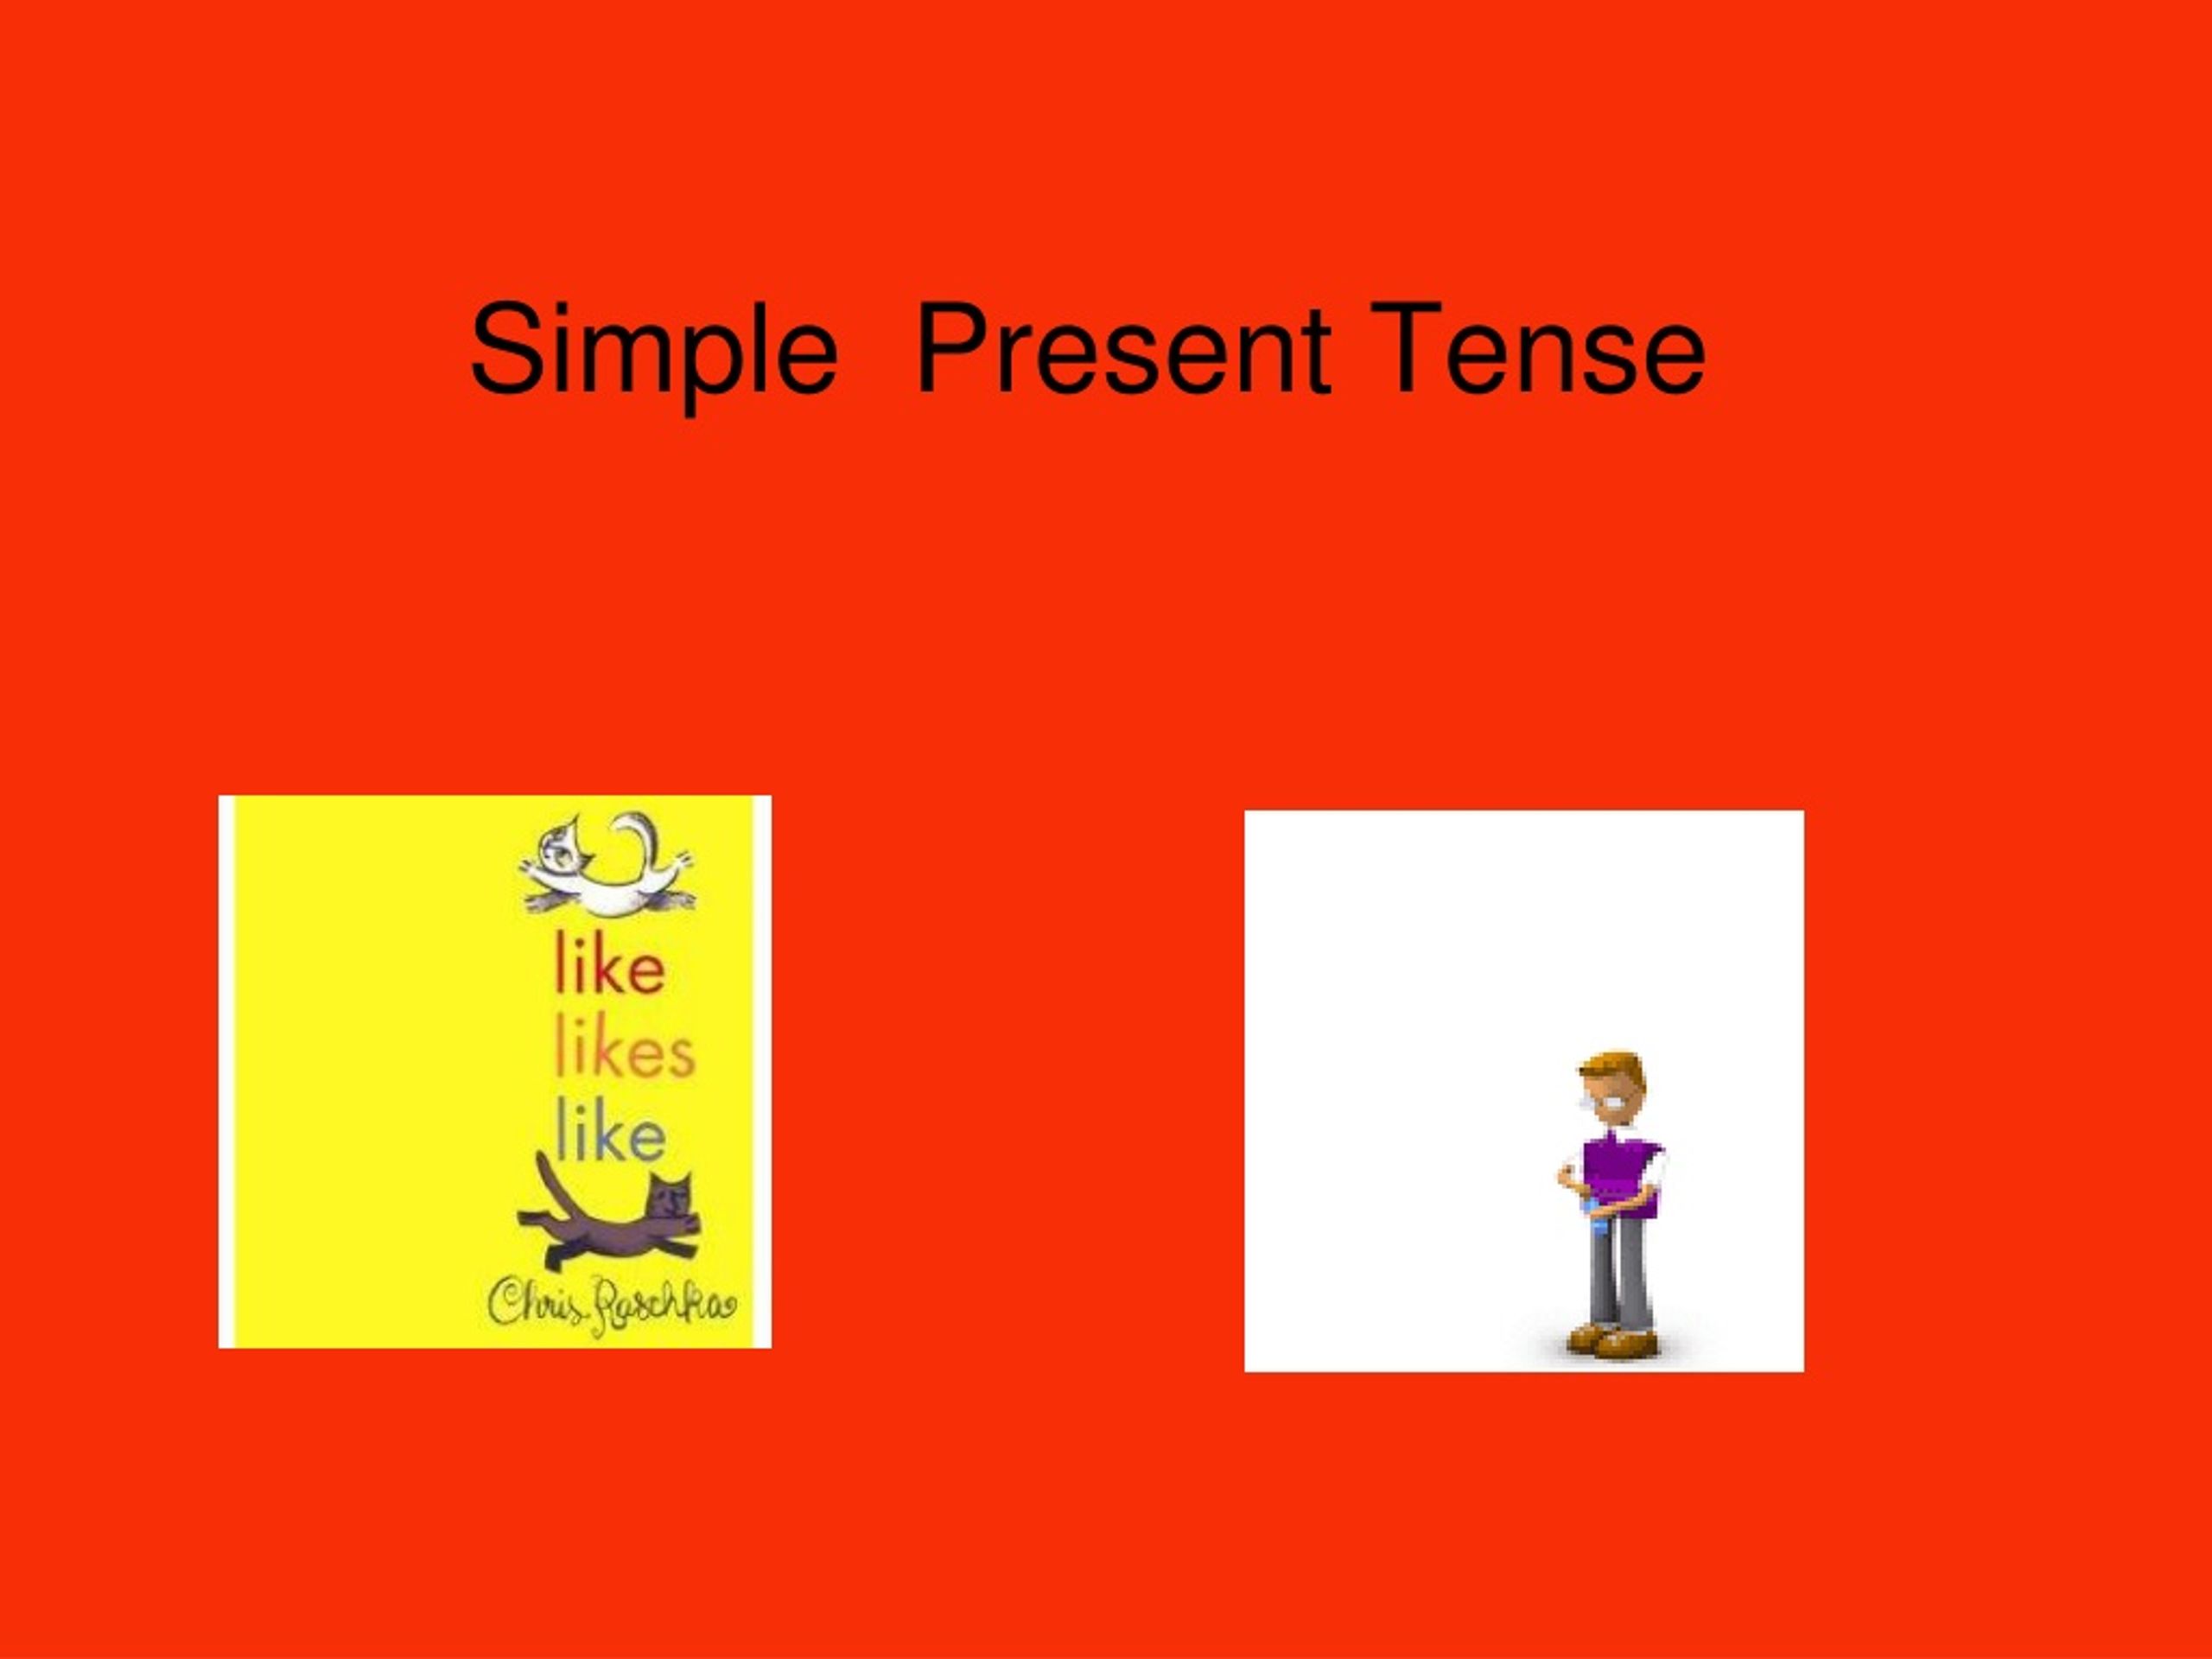 simple present tense powerpoint presentation download